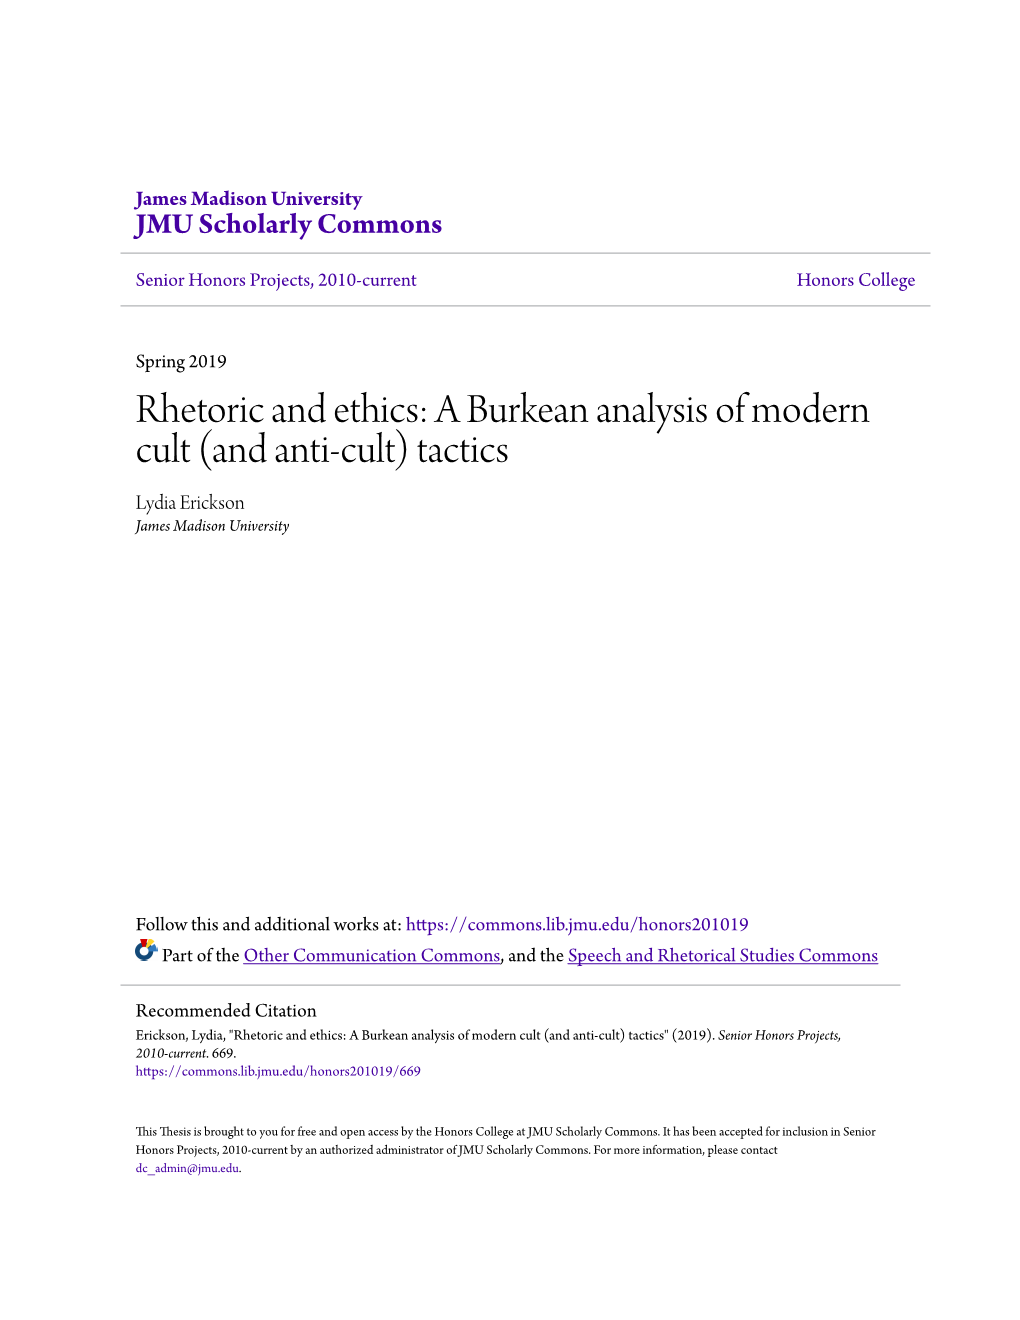 Rhetoric and Ethics: a Burkean Analysis of Modern Cult (And Anti-Cult) Tactics Lydia Erickson James Madison University